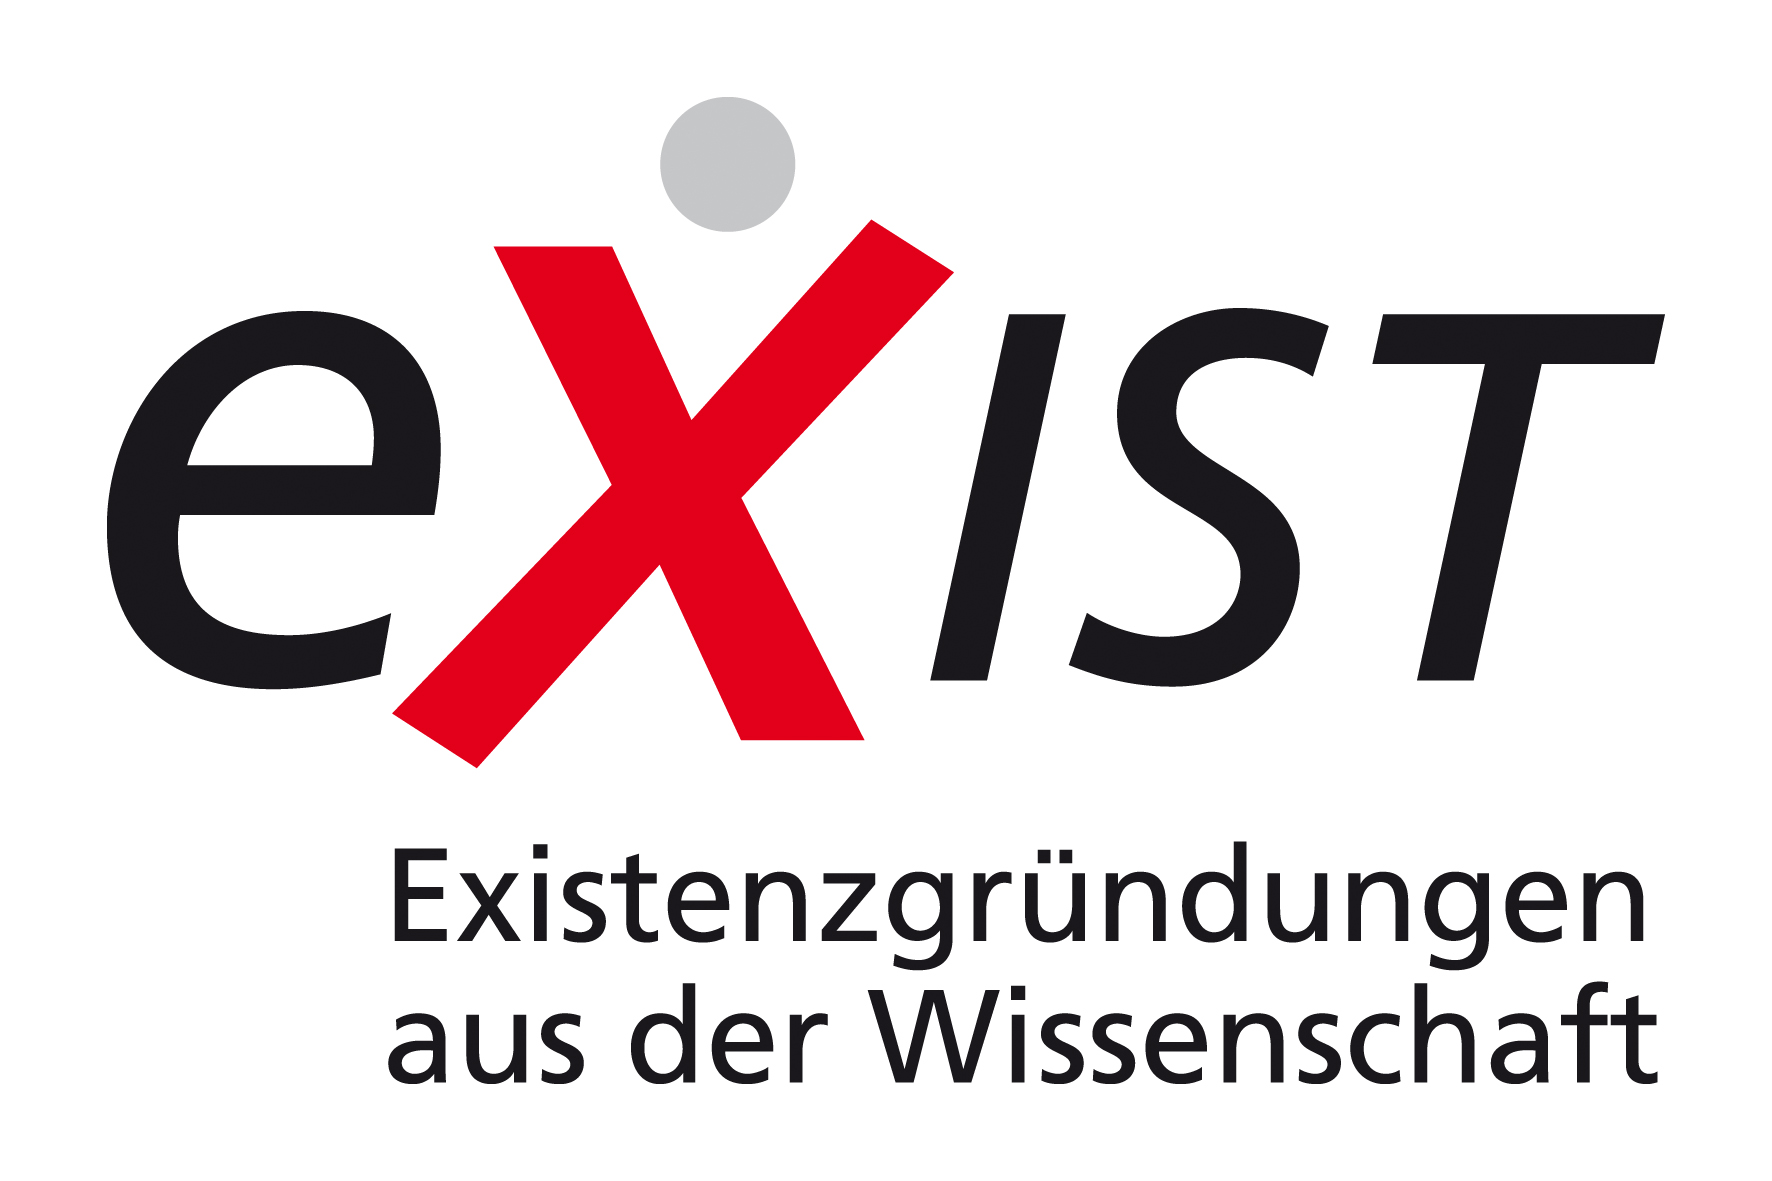 [Translate to English:] Logo EXIST